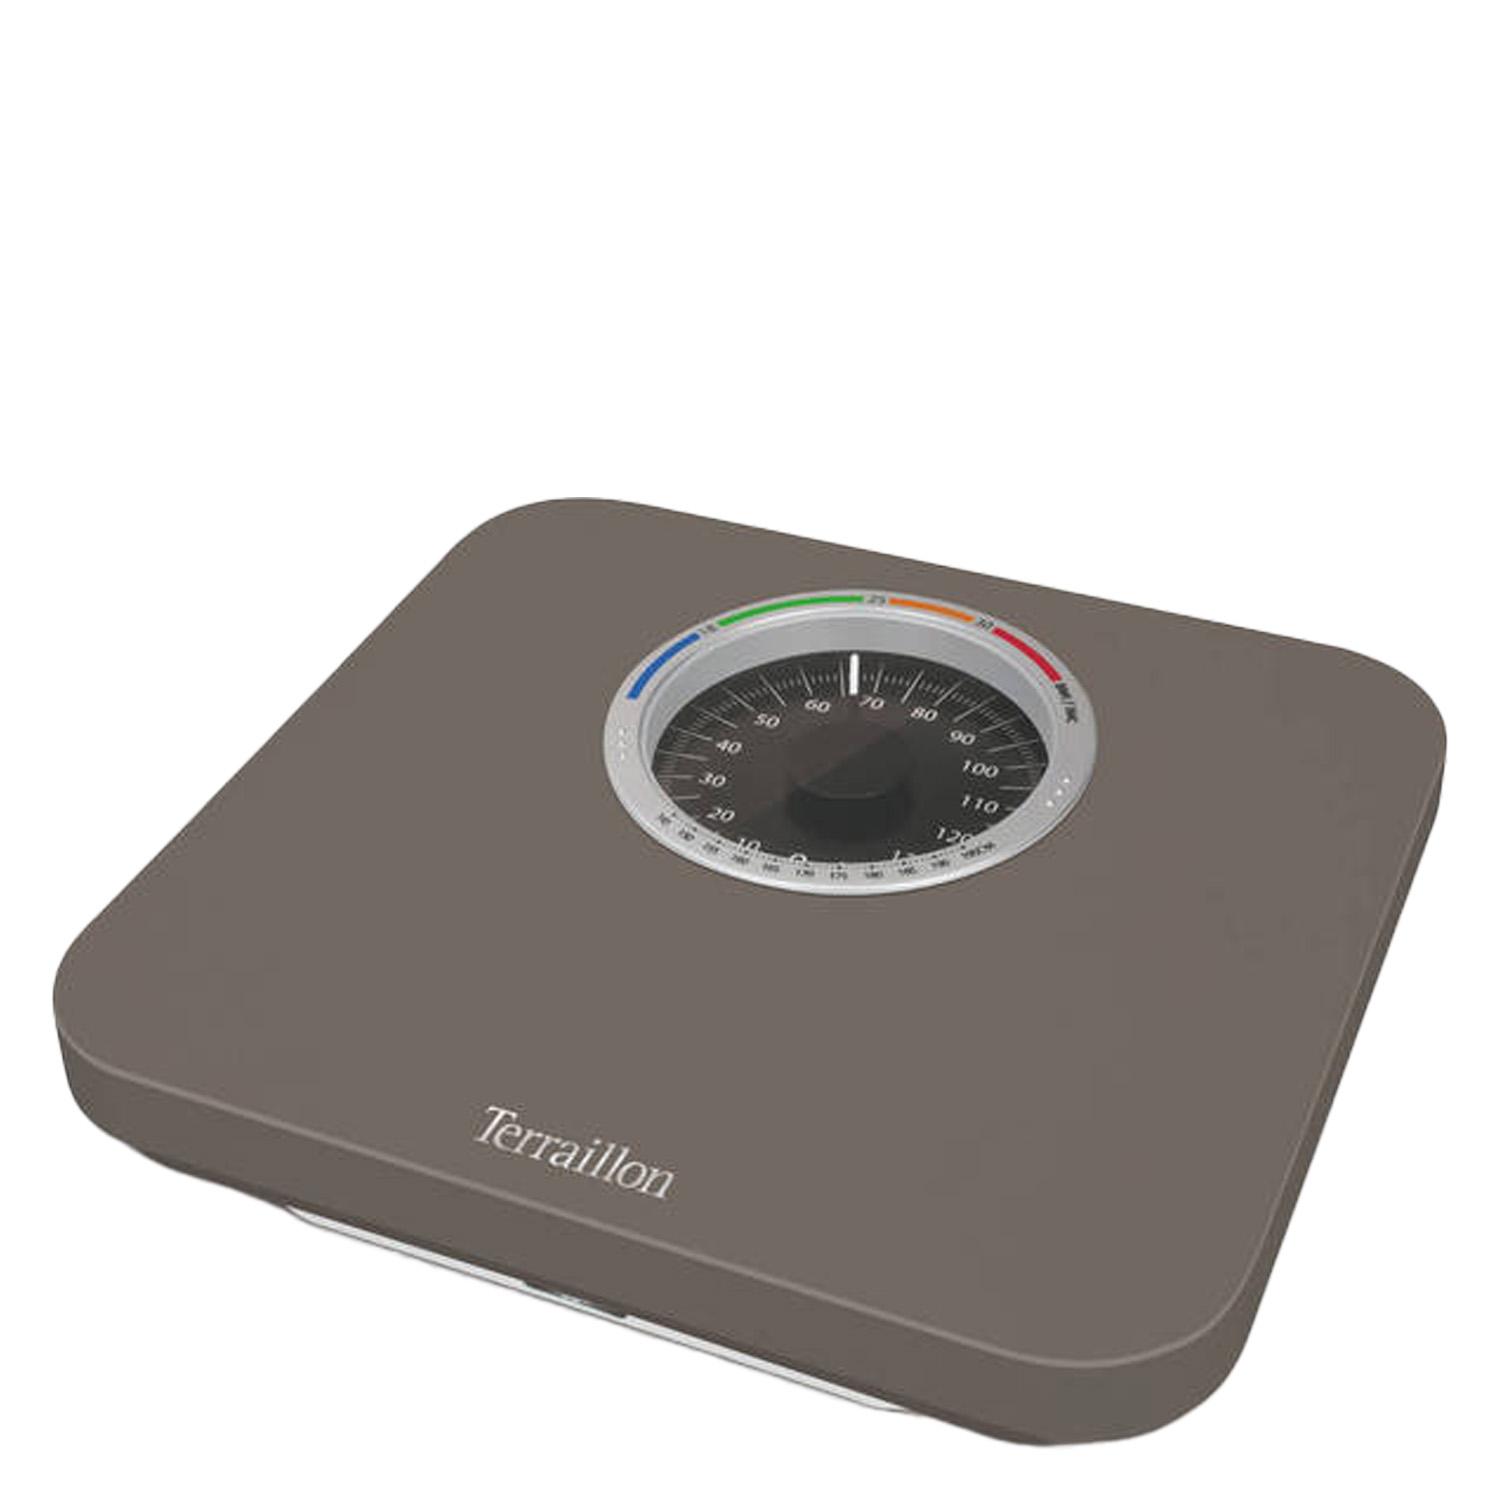 Terraillon - Nautic Up Brown Body Scale